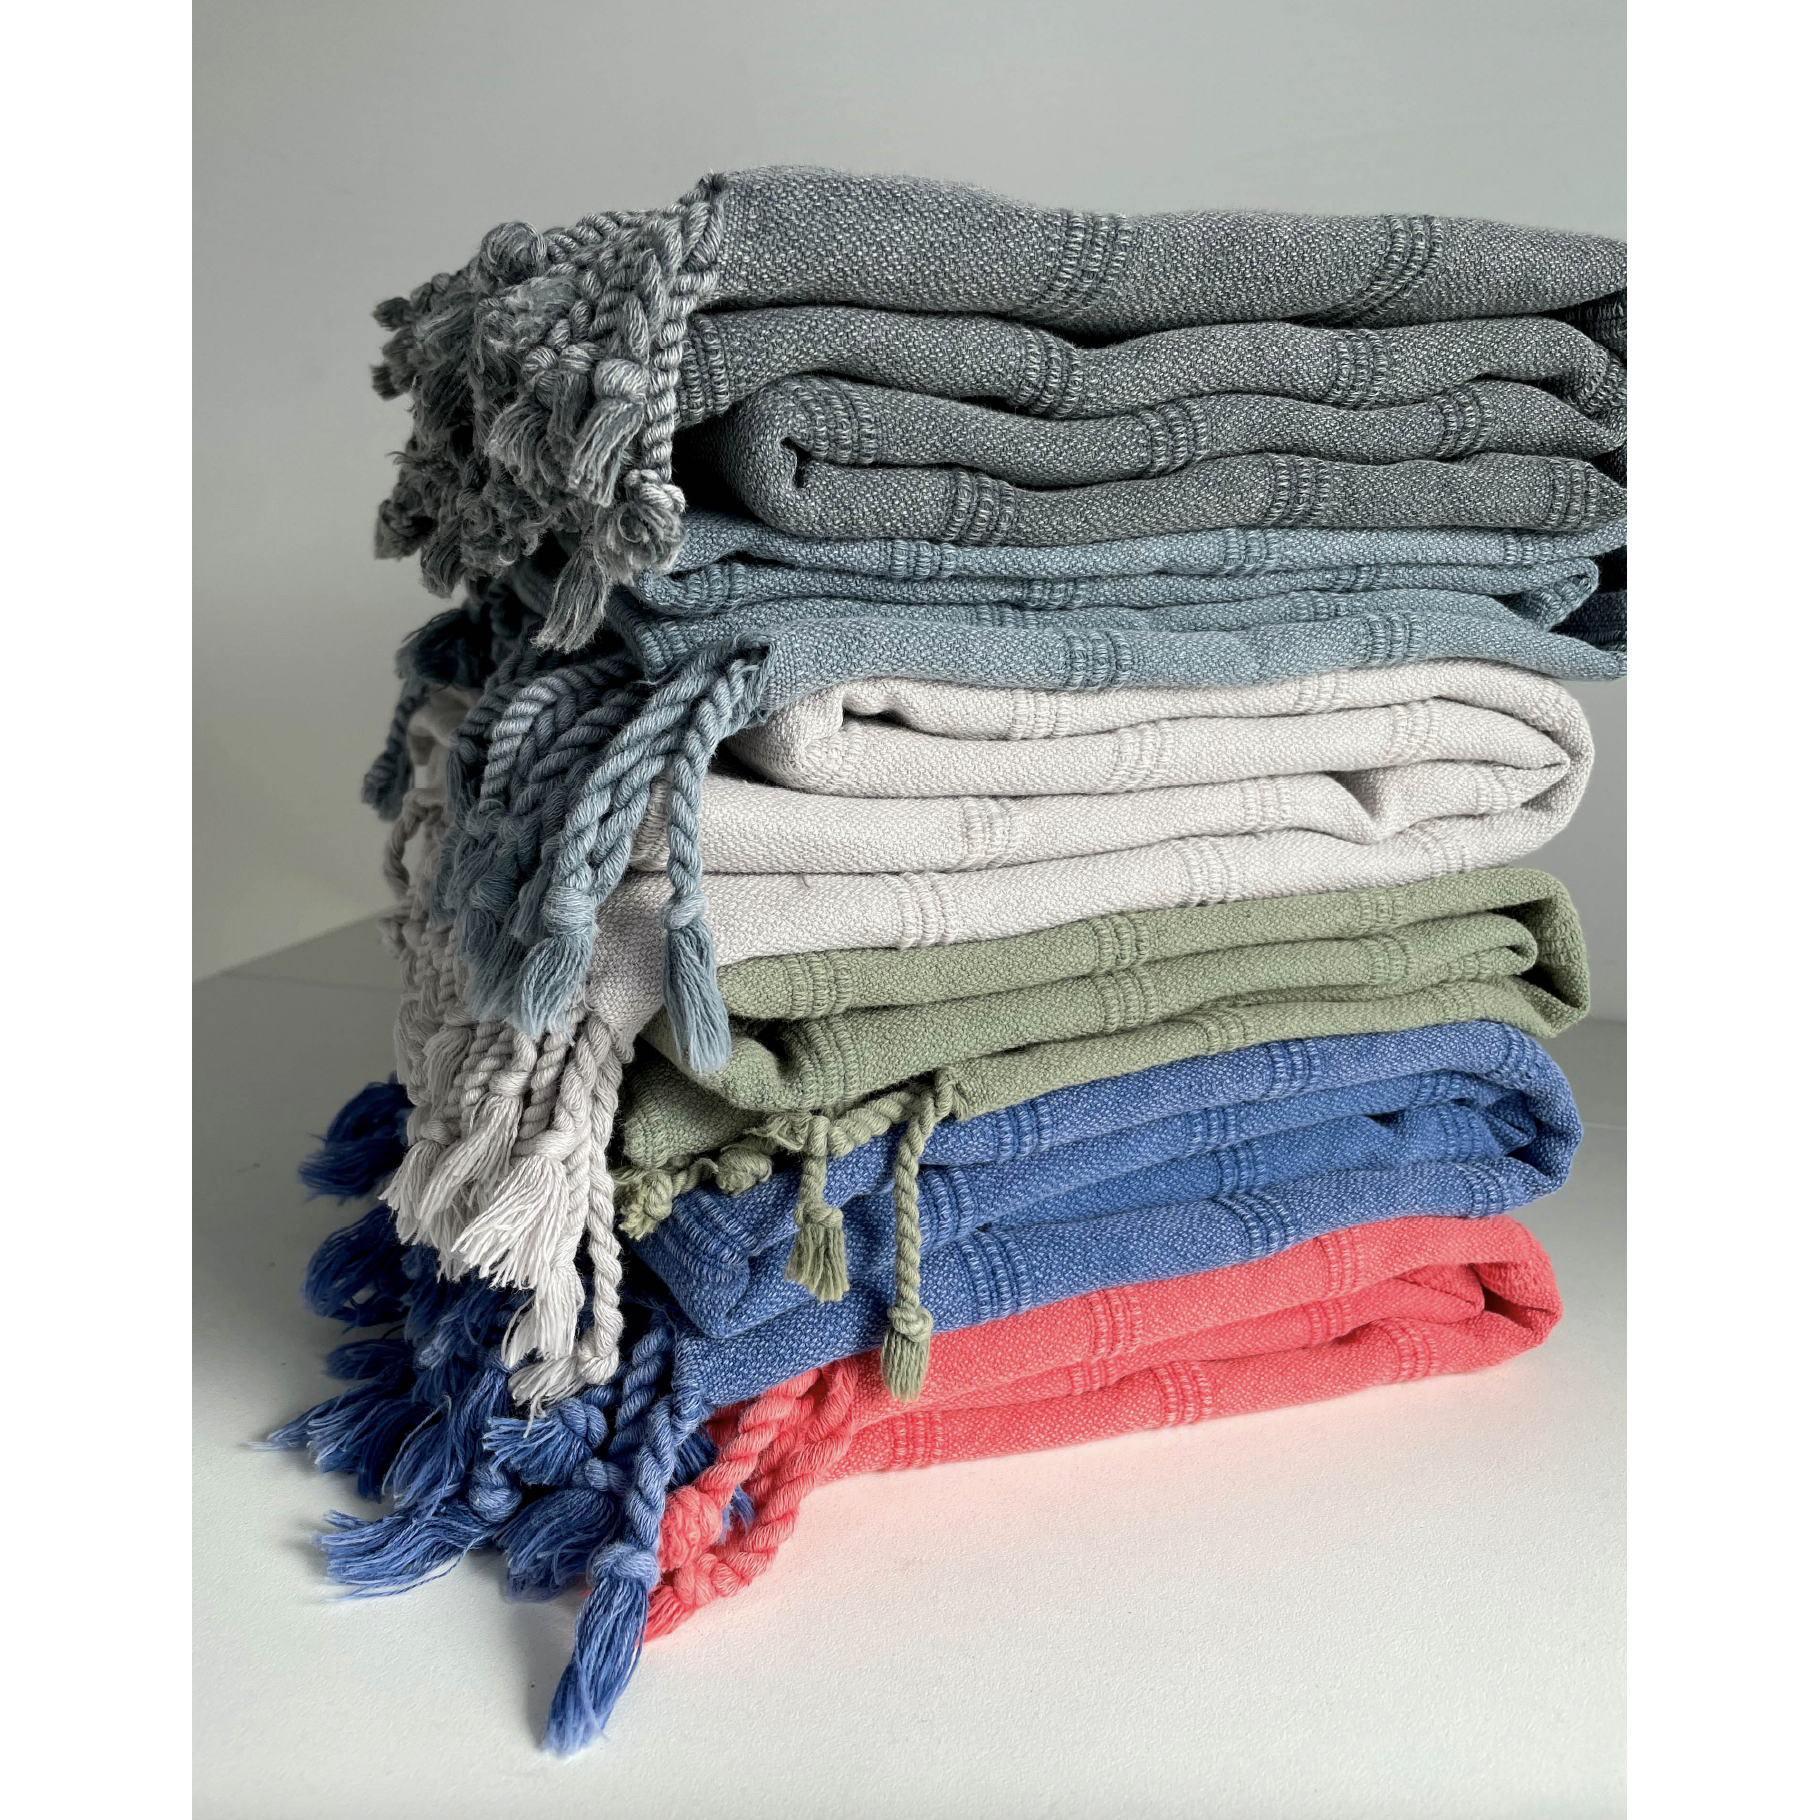 Lanai - Super soft, Turkish Towels, Multiple Colors